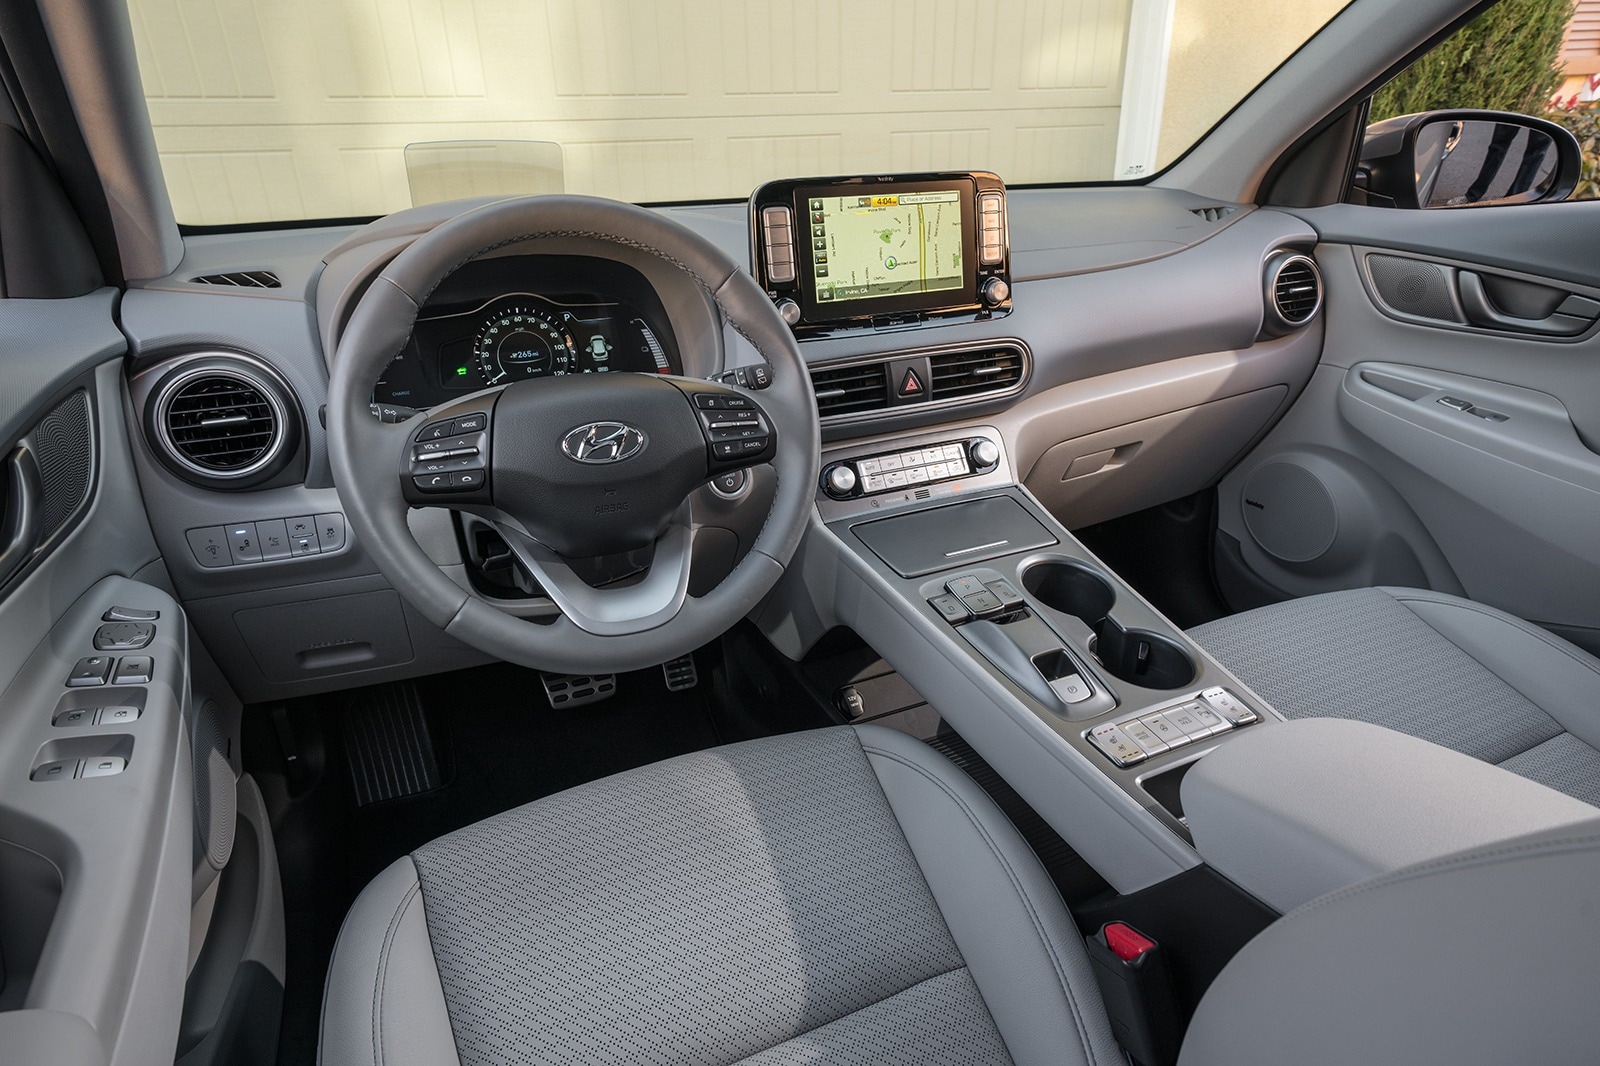 Used 2019 Hyundai Kona Electric SUV Review | Edmunds